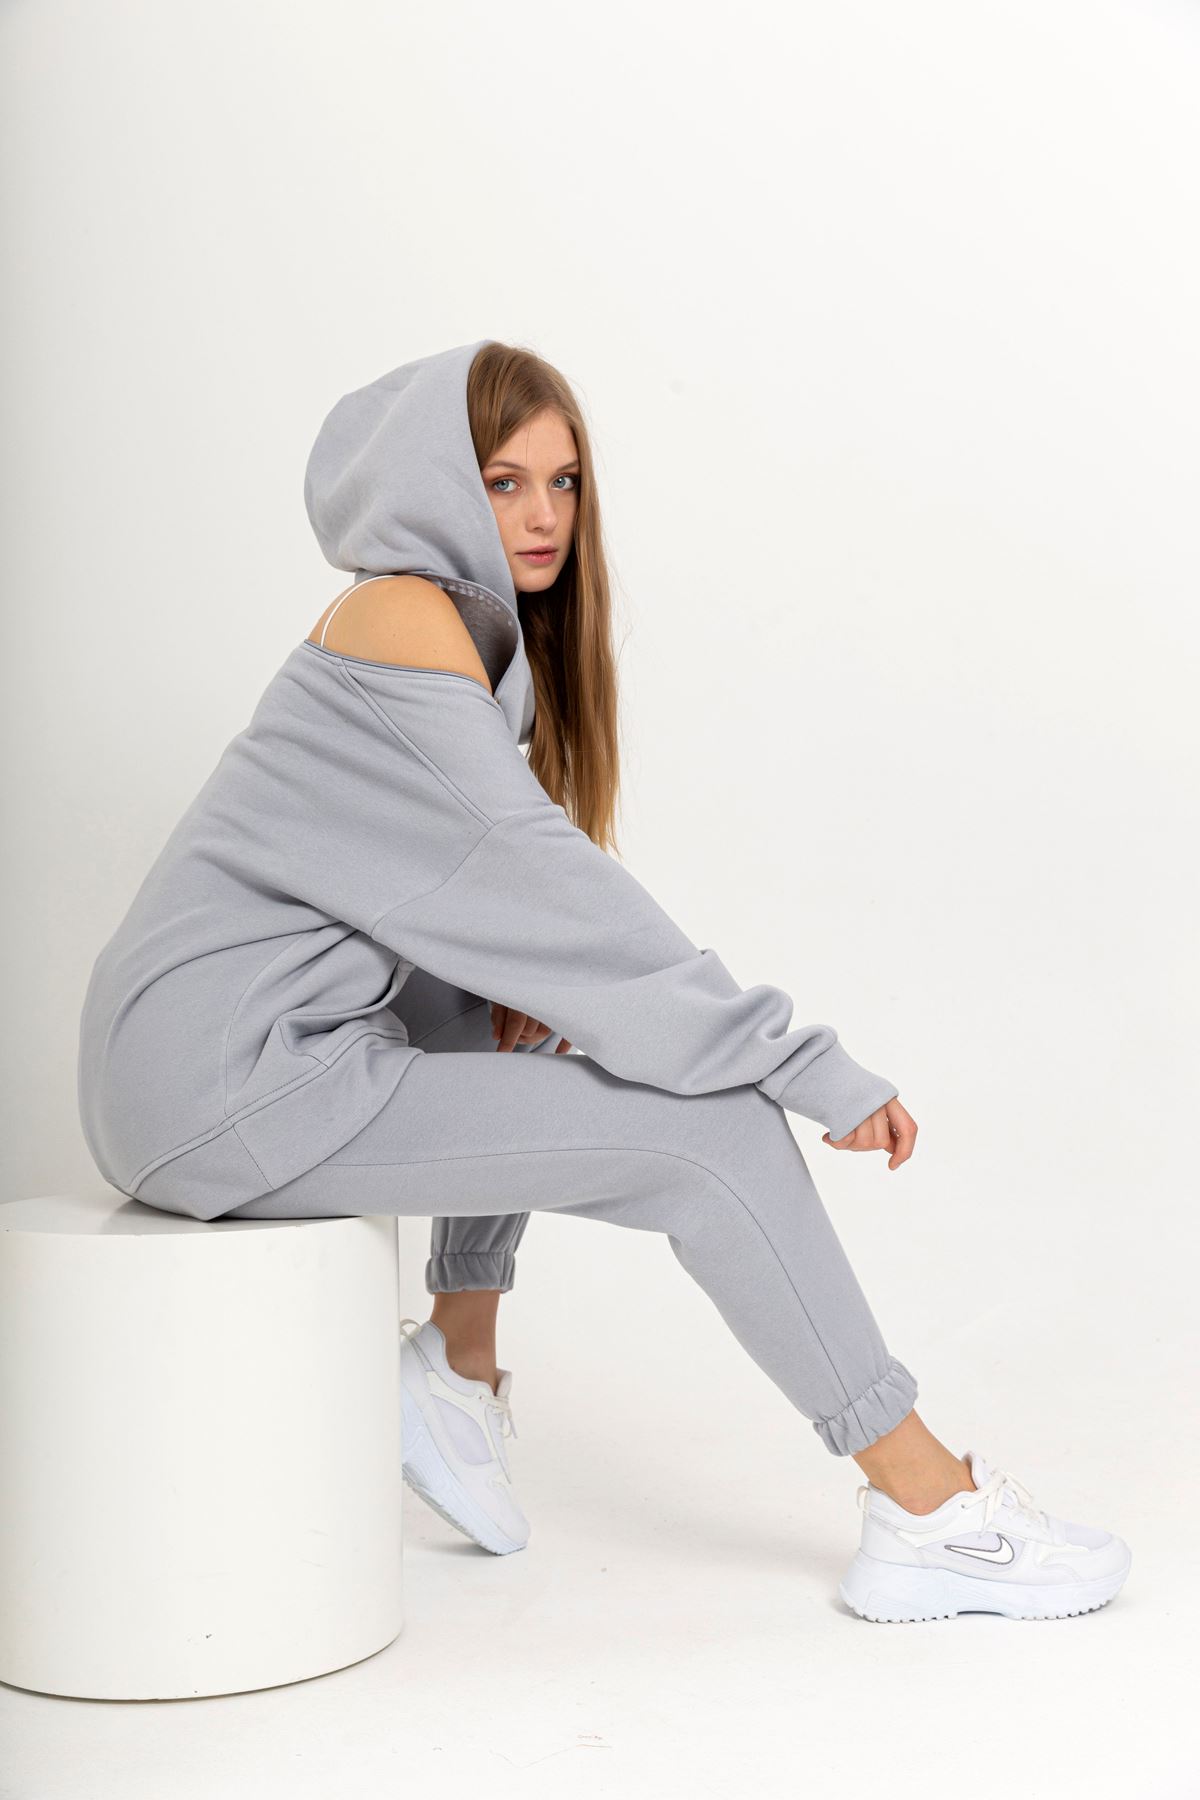 Thread Knit FabricLong Sleeve Hooded Below Hip Oversize Zip Women Sweatshirt - Grey